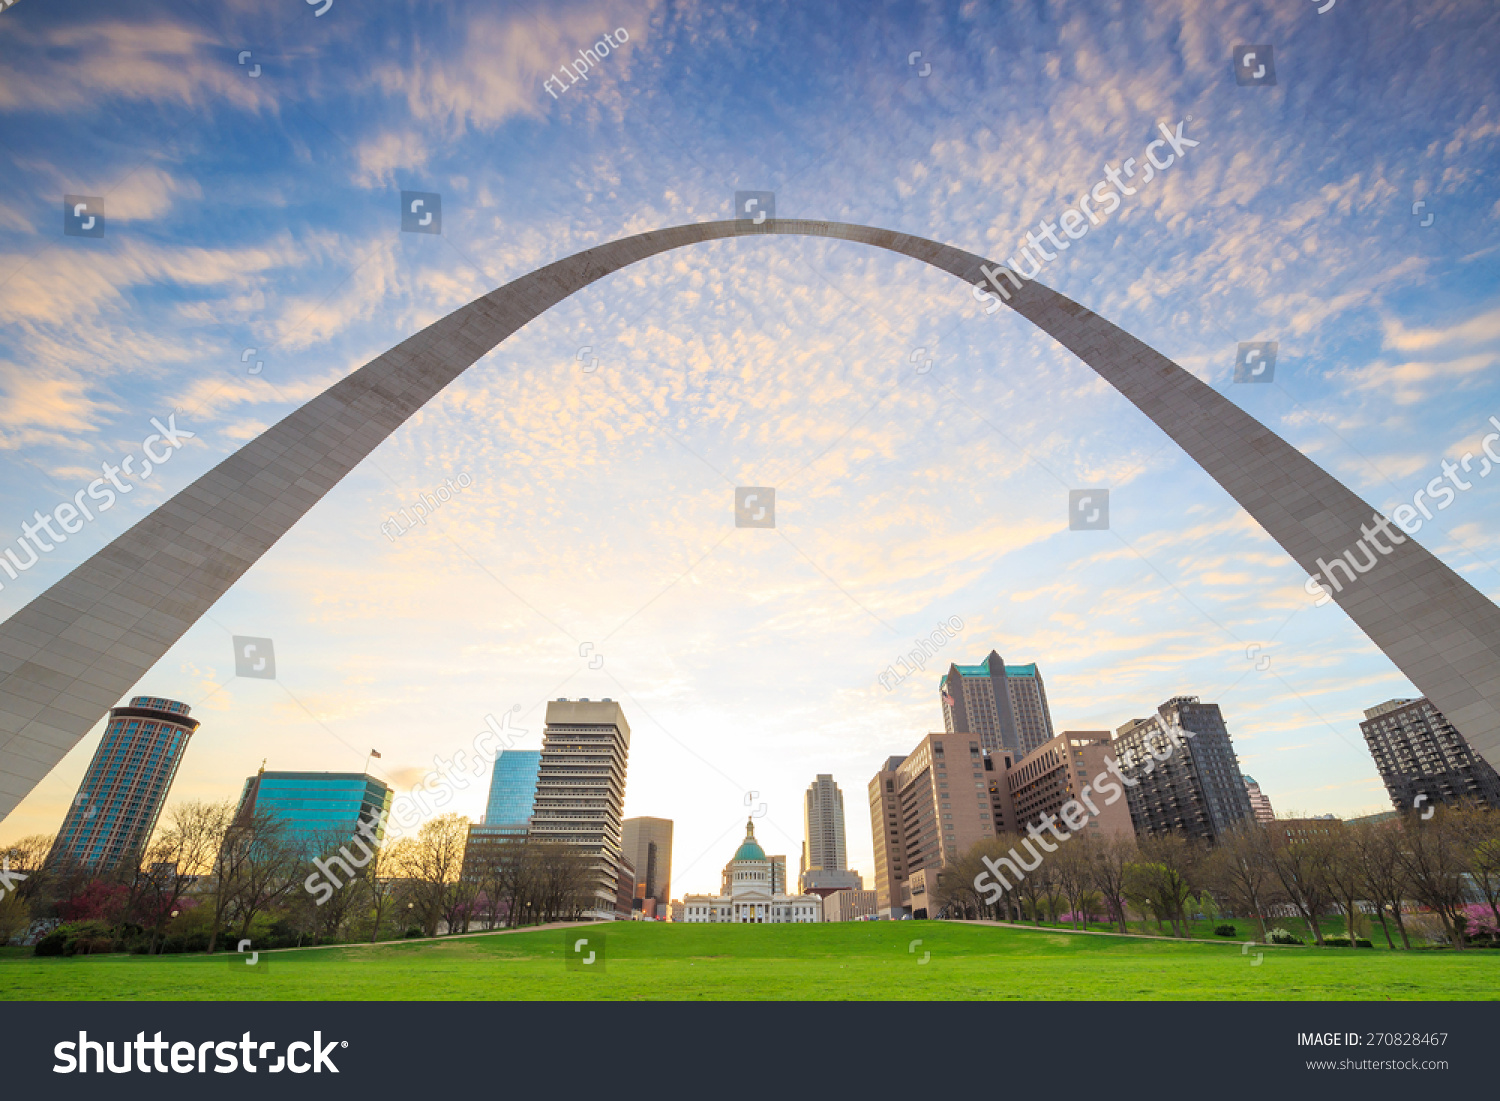 City of St. Louis skyline at twilight. #270828467